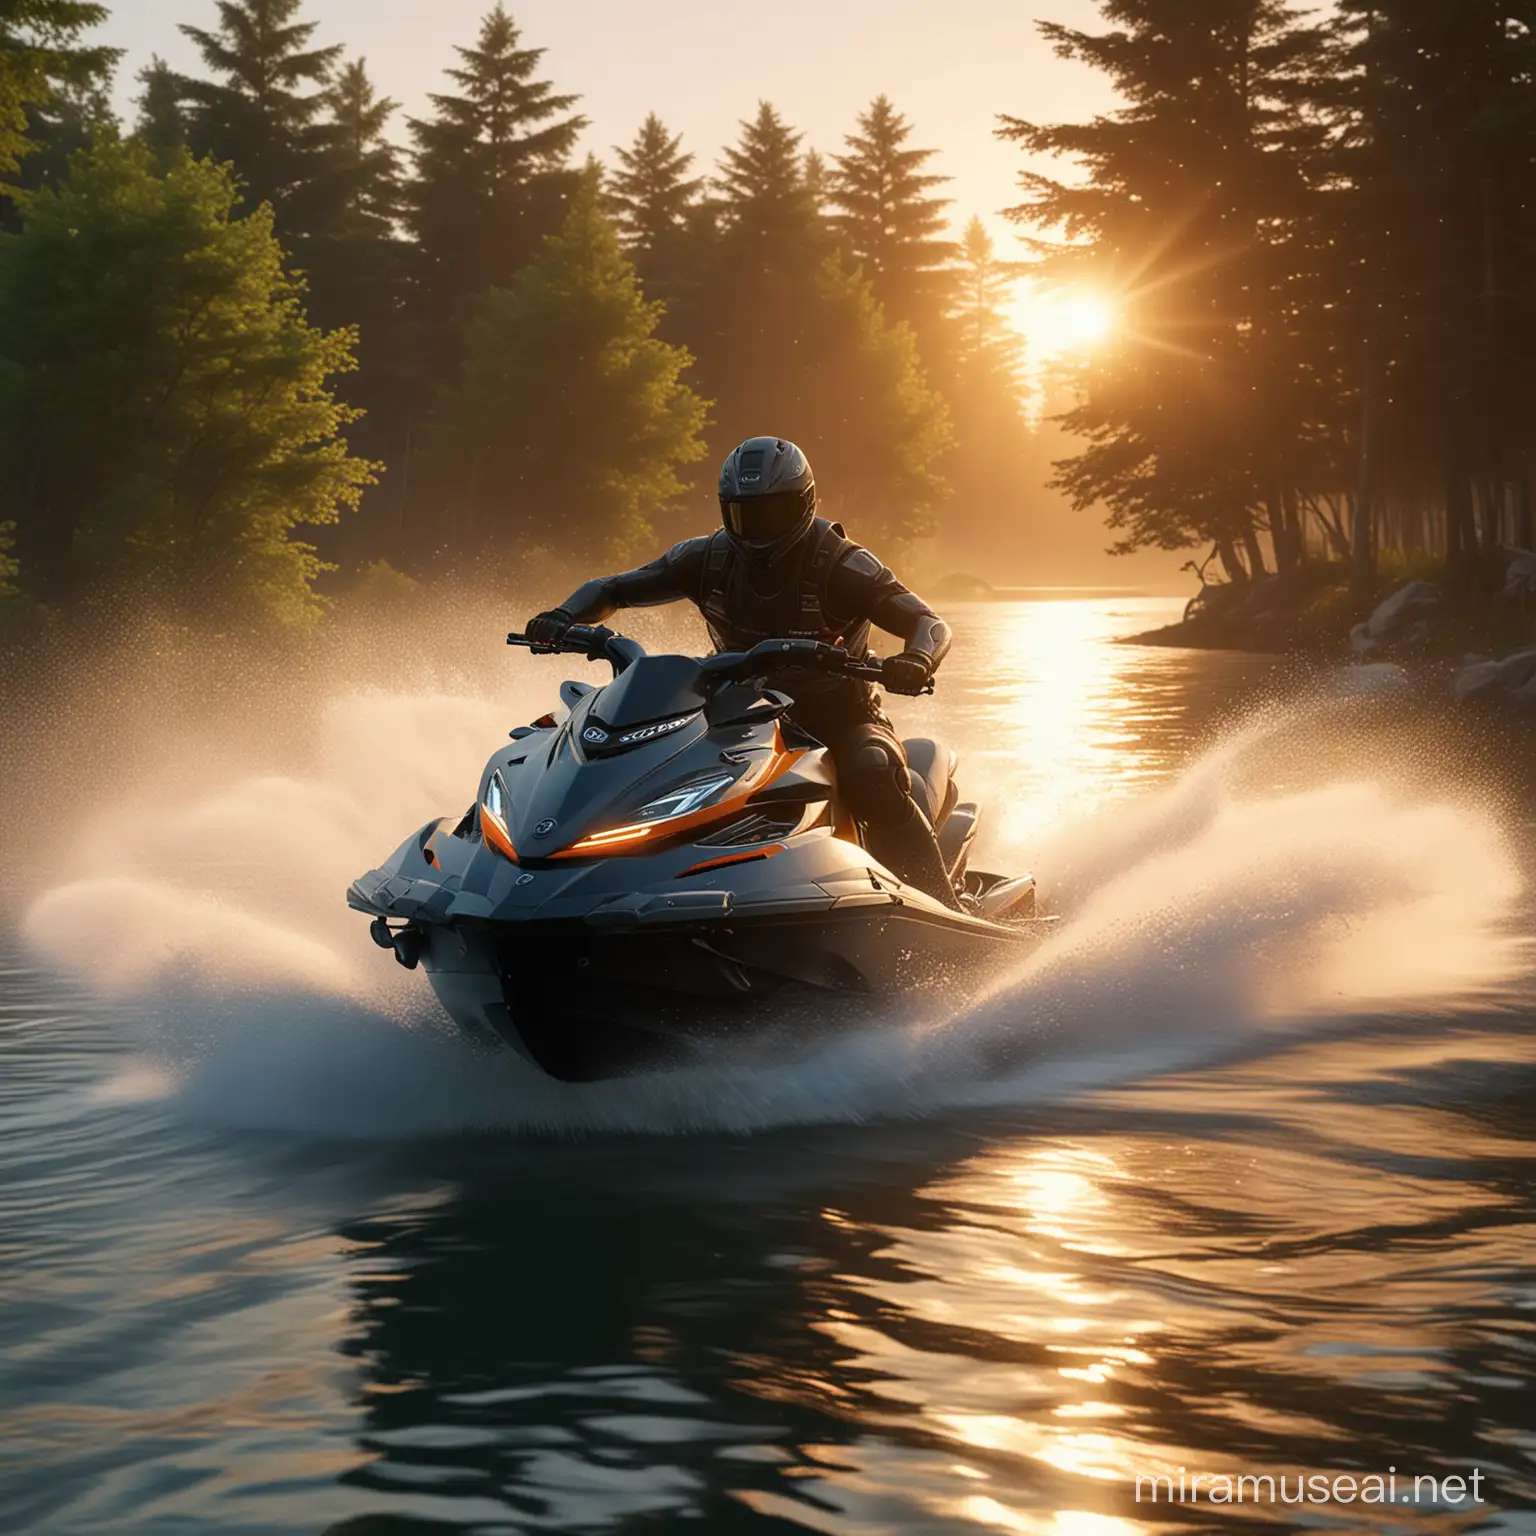 Sunset Jetski Ride Realistic Water Adventure with Cinematic Lighting